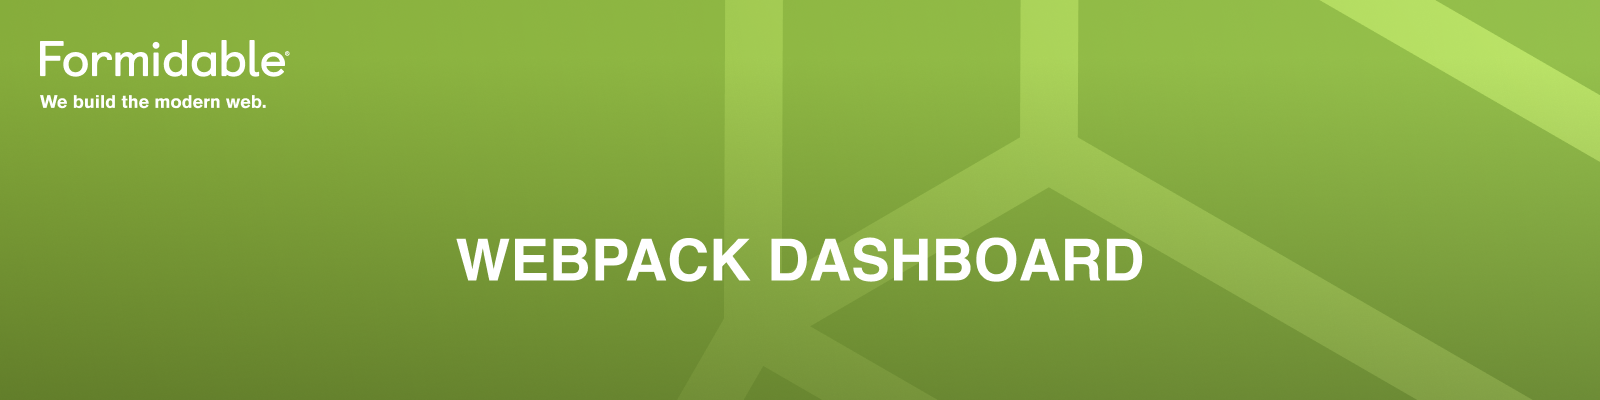 Webpack Dashboard — Formidable, We build the modern web